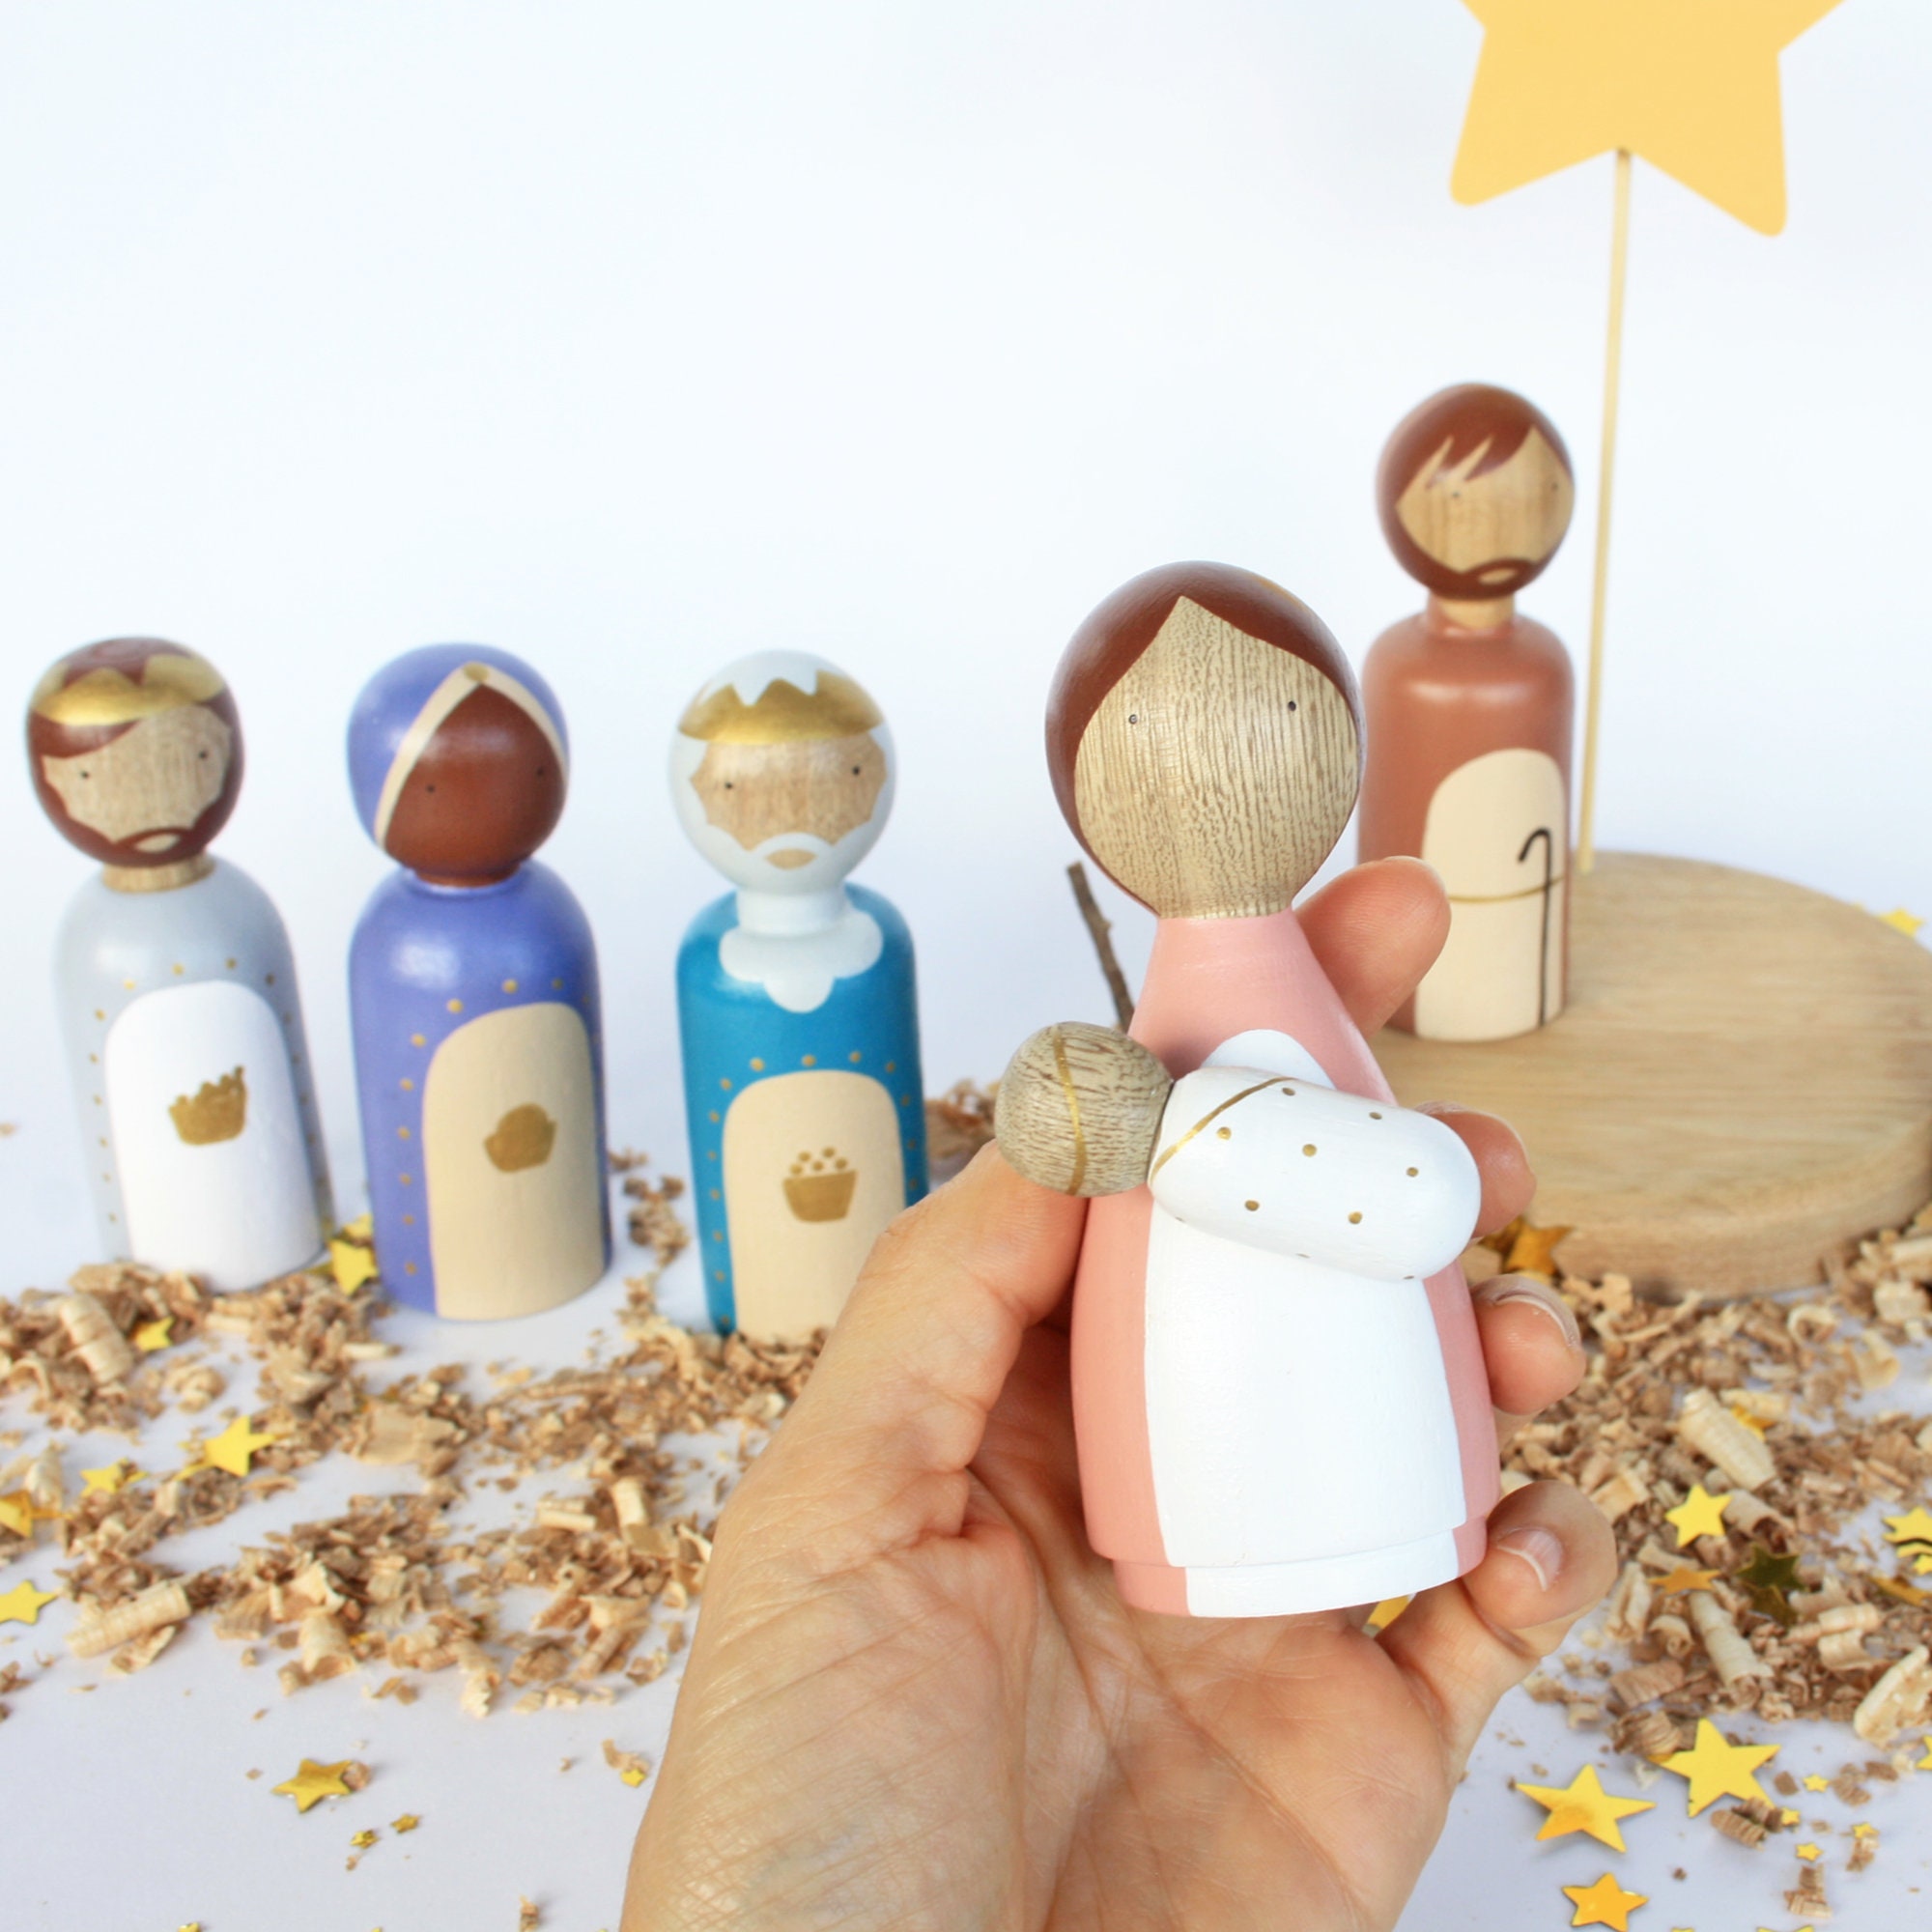 Nativity Peg Doll GIFT SET Collab w/Woodies